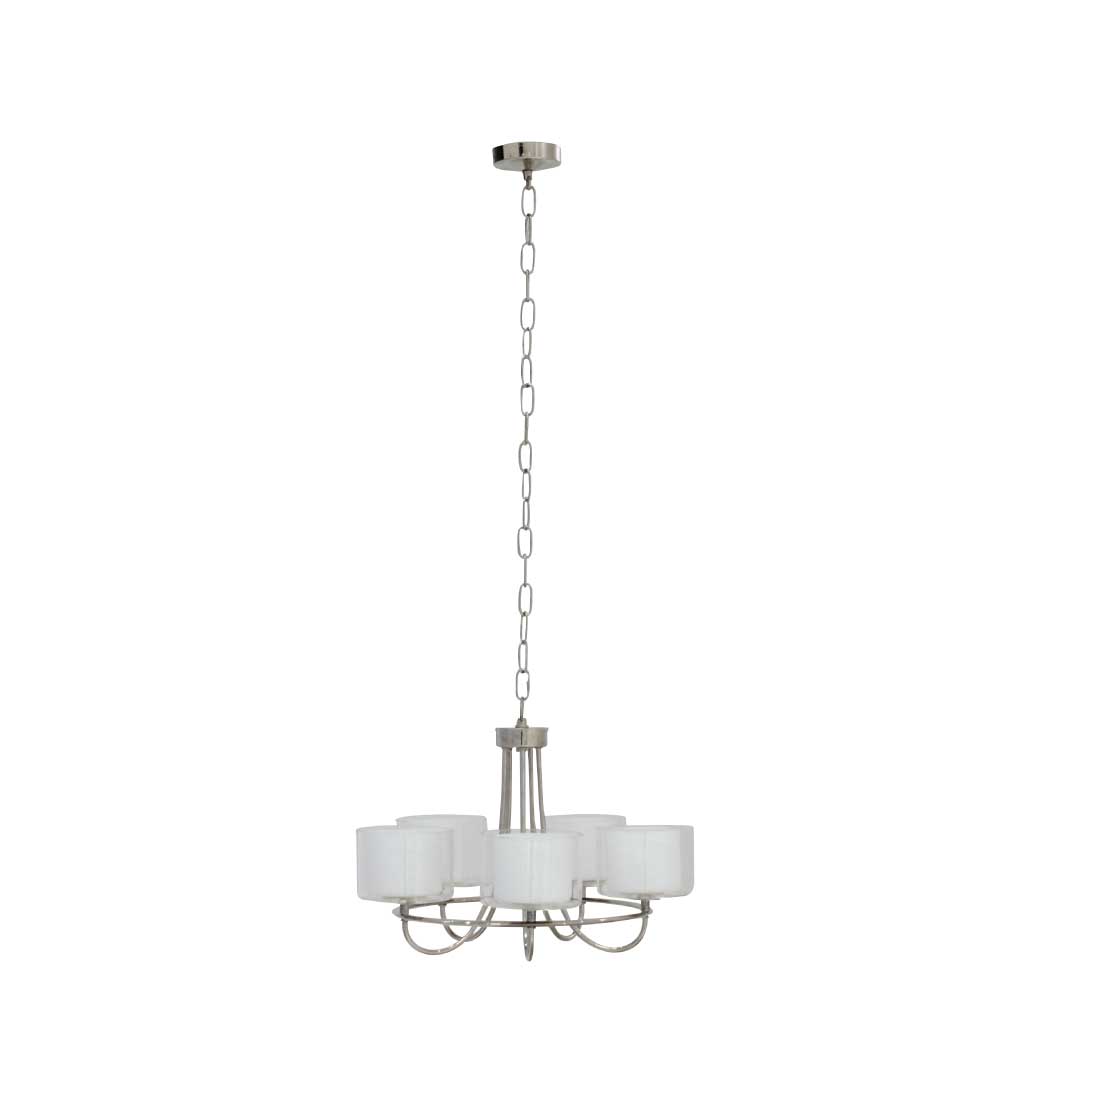 25030737-luxury-lighting-lighting-ceiling-lamp-01